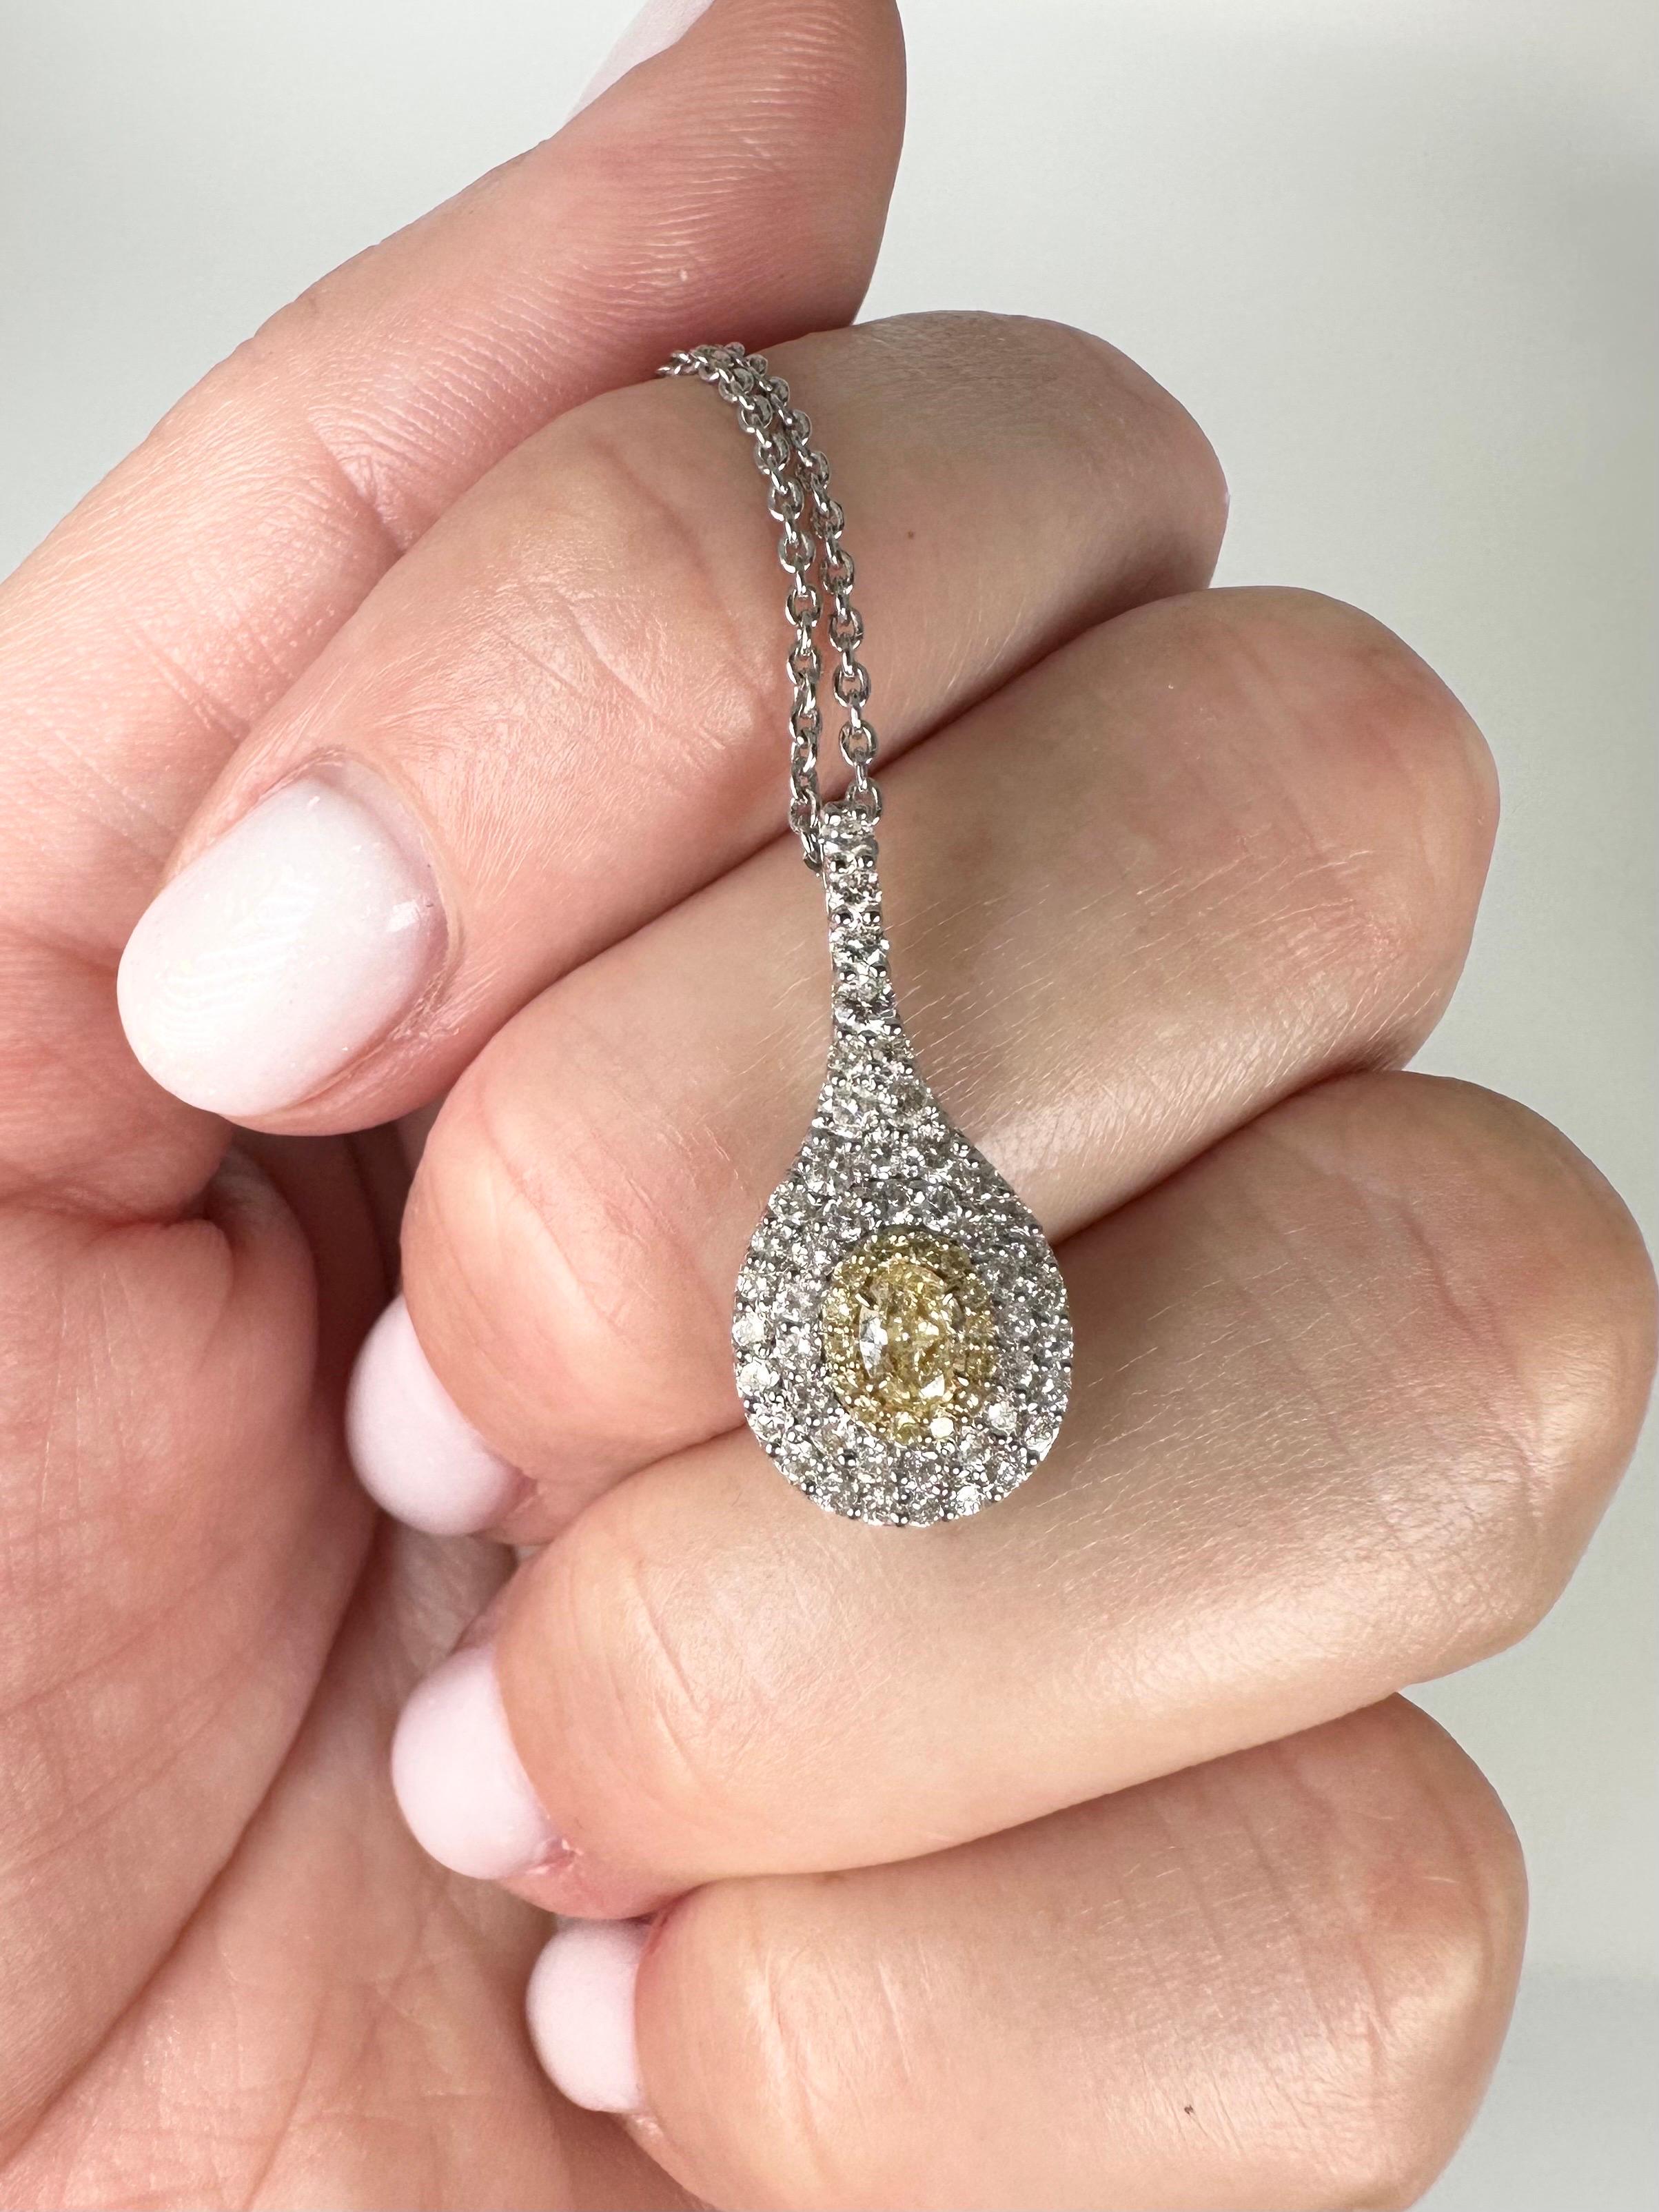 Collier pendentif en diamant jaune fantaisie en or blanc 18KT, superbe pendentif classique qui s'harmonisera avec toutes les tenues !

OR : or 18KT
DIAMANT(S) NATUREL(S)
Clarté/couleur : VS/G
Carat:0.30ct
Taille:Brilliante ronde
DIAMANT(S) JAUNE(S)